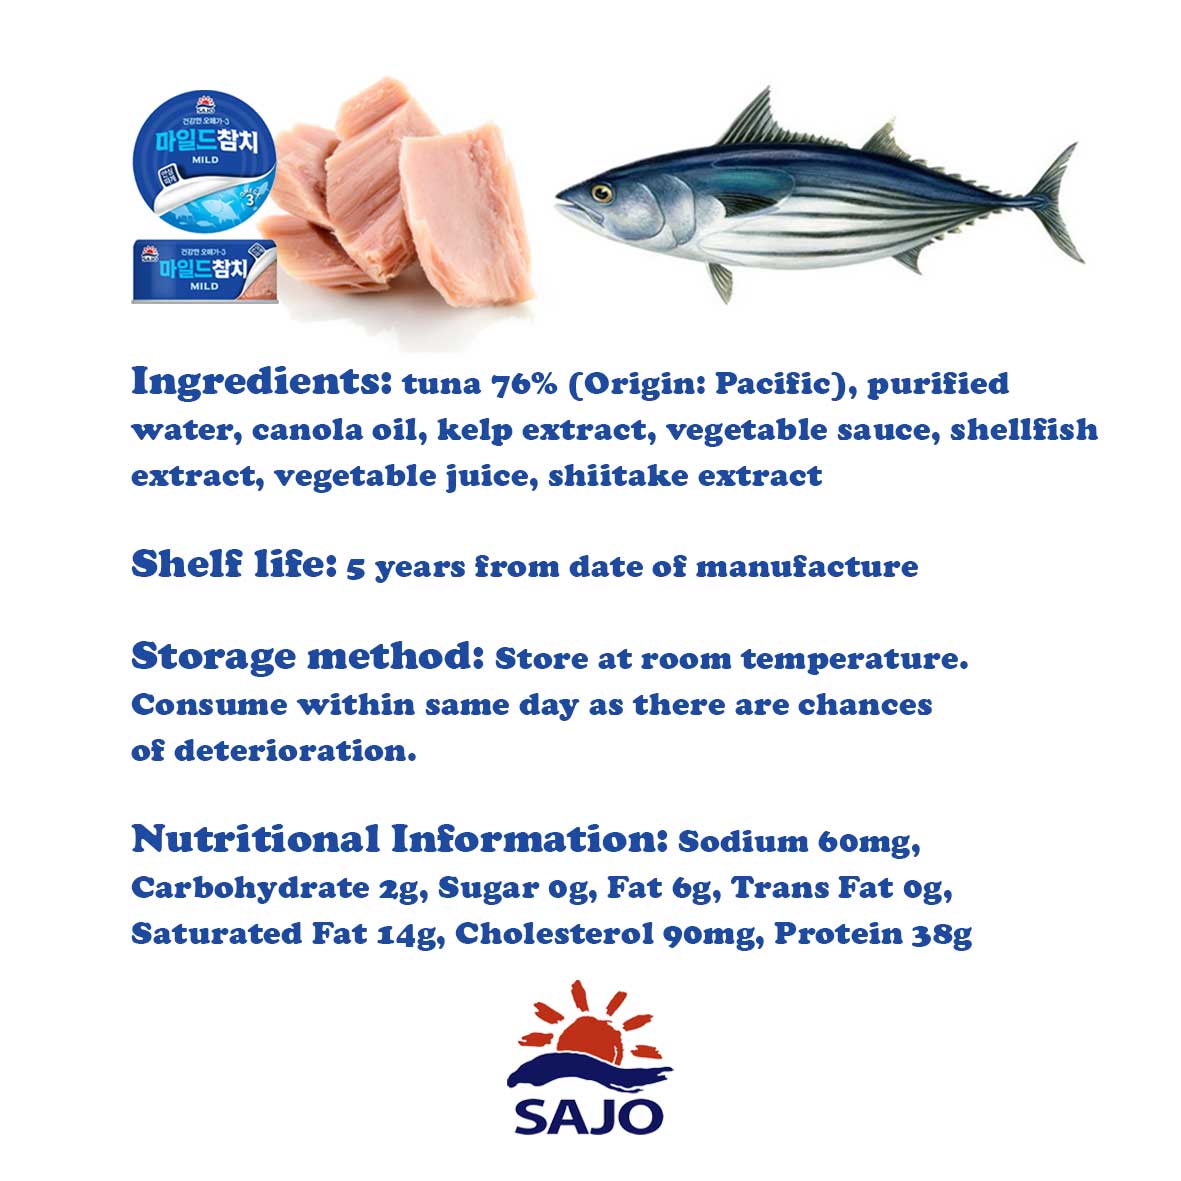 sajo-tuna-ingredients